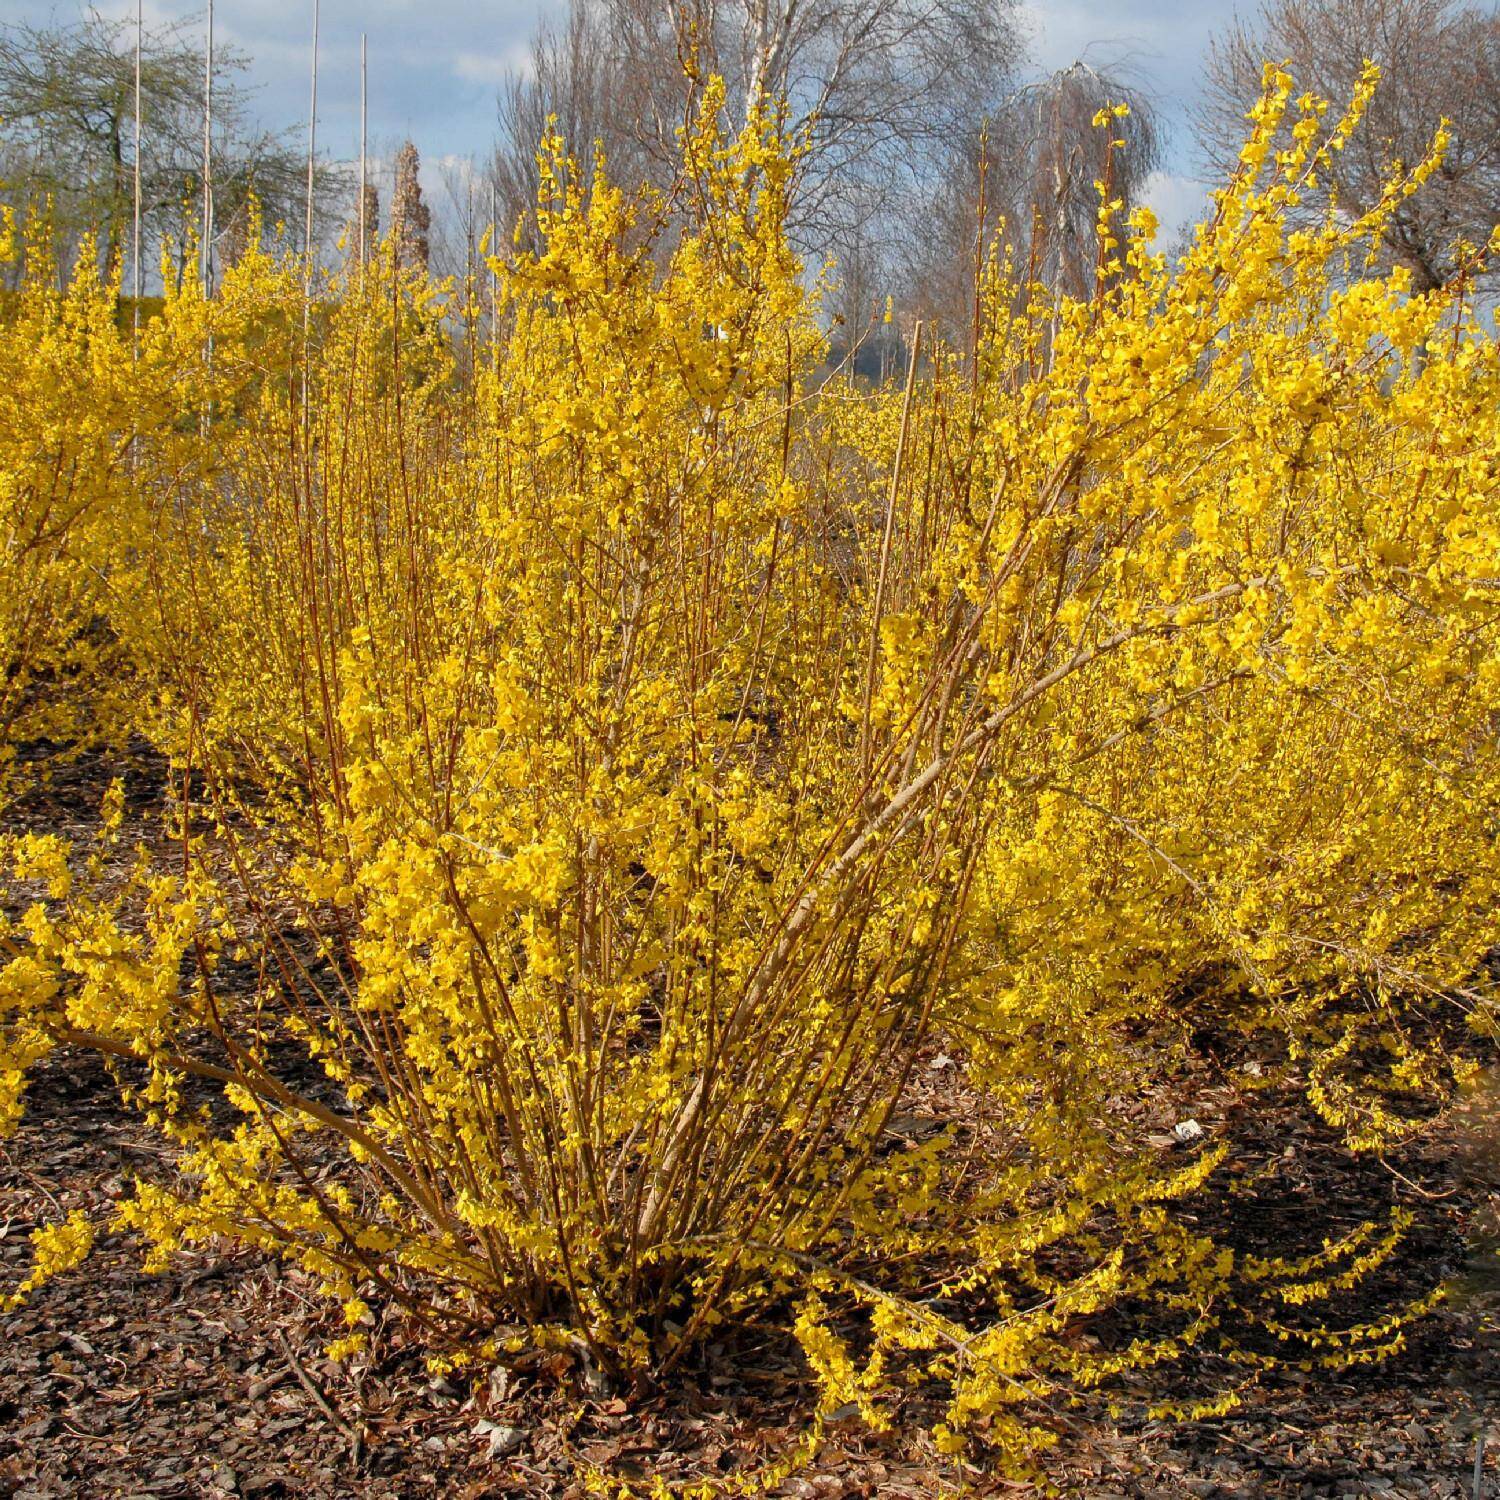  Goldglöckchen 'Minigold' - Forsythia intermedia 'Minigold'